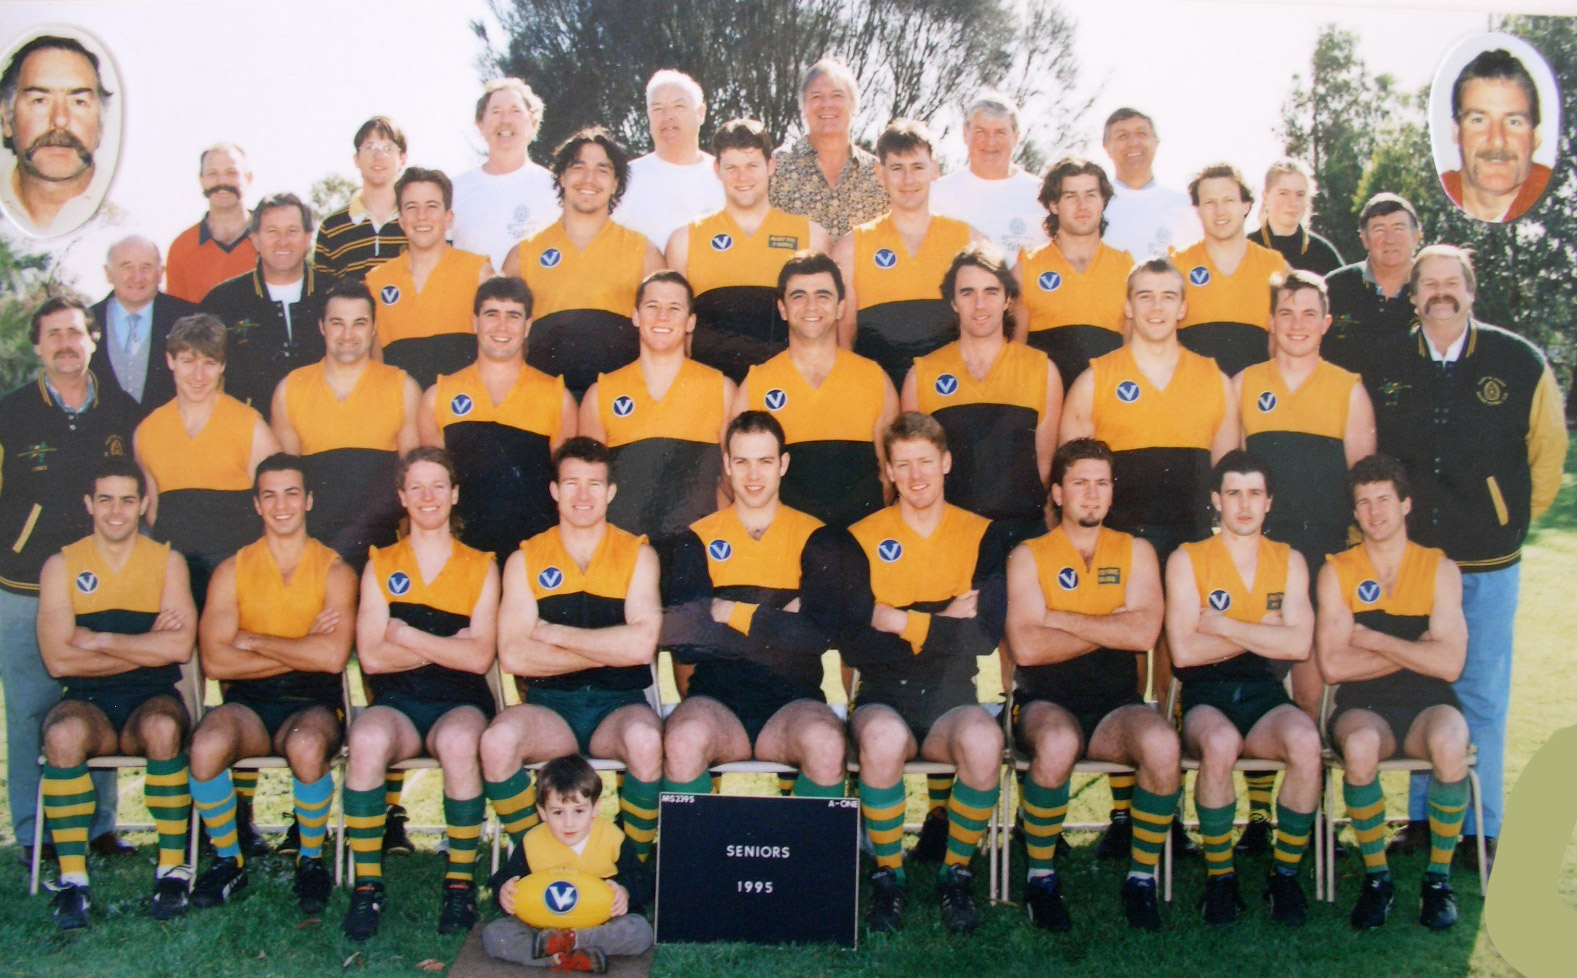 1995-seniors-team-photo